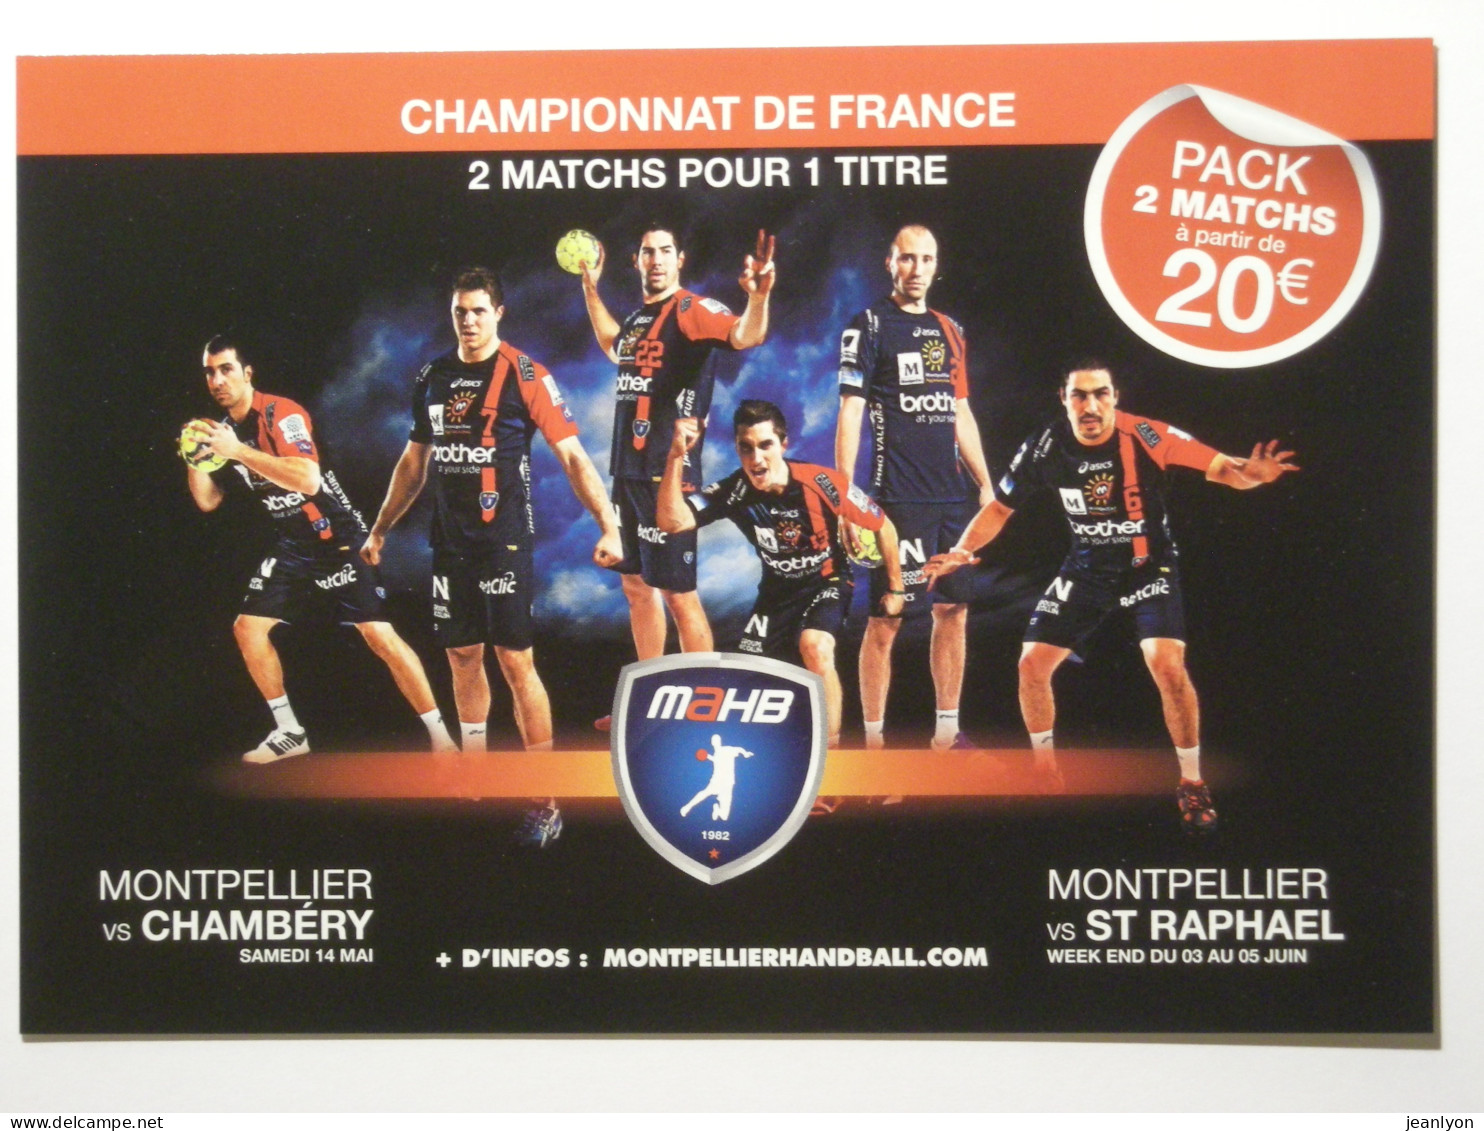 HANDBALL - MONTPELLIER - MAHB - Joueurs De Hand, équipe Karabatic - Championnat France 2011 - Carte Publicitaire - Handbal